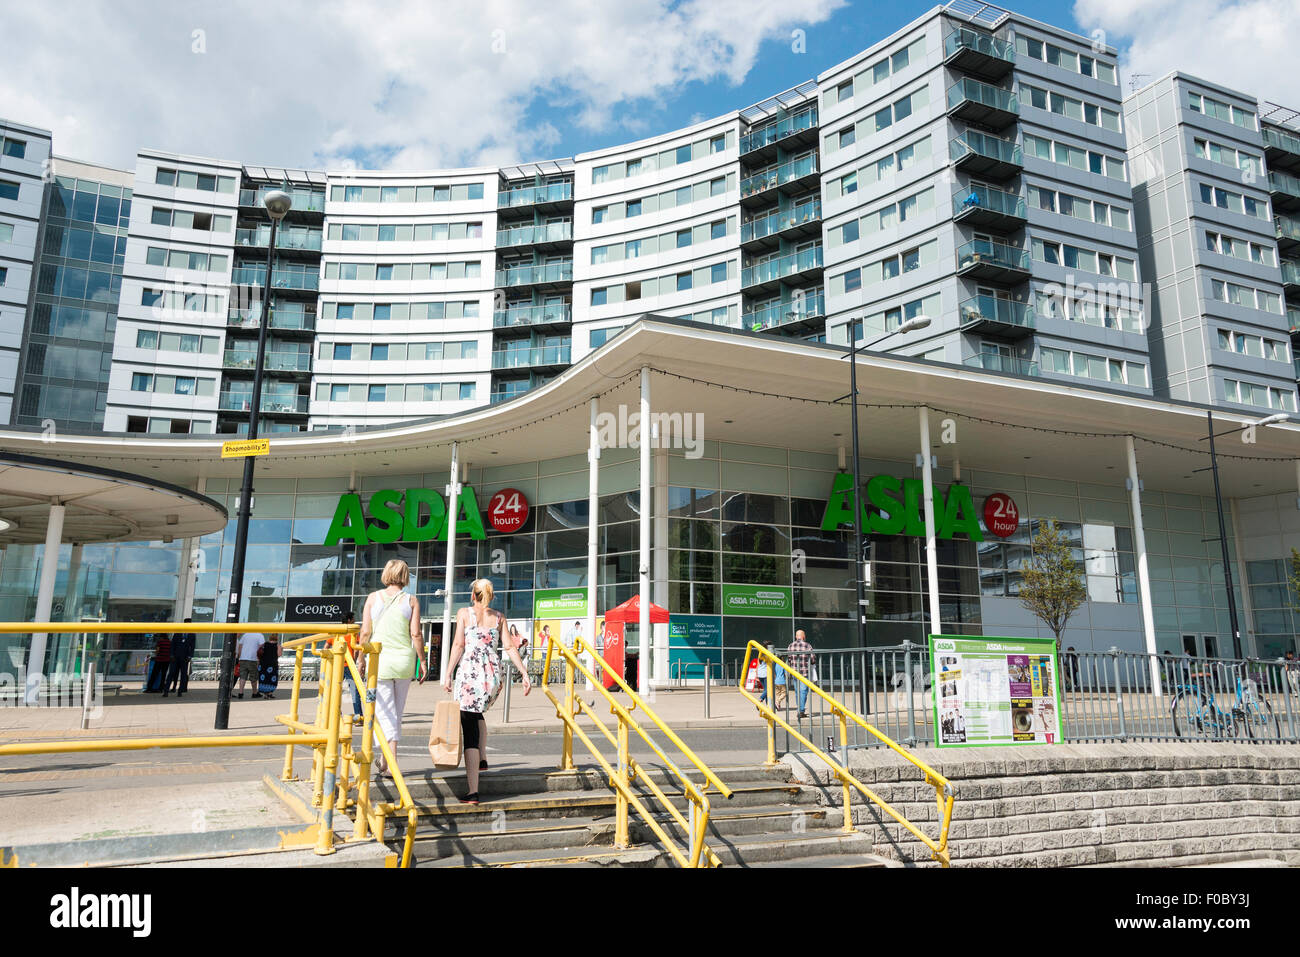 Asda Supermarket, The Blenheim Centre, Hounslow, London Borough of Hounslow, Greater London, England, United Kingdom Stock Photo